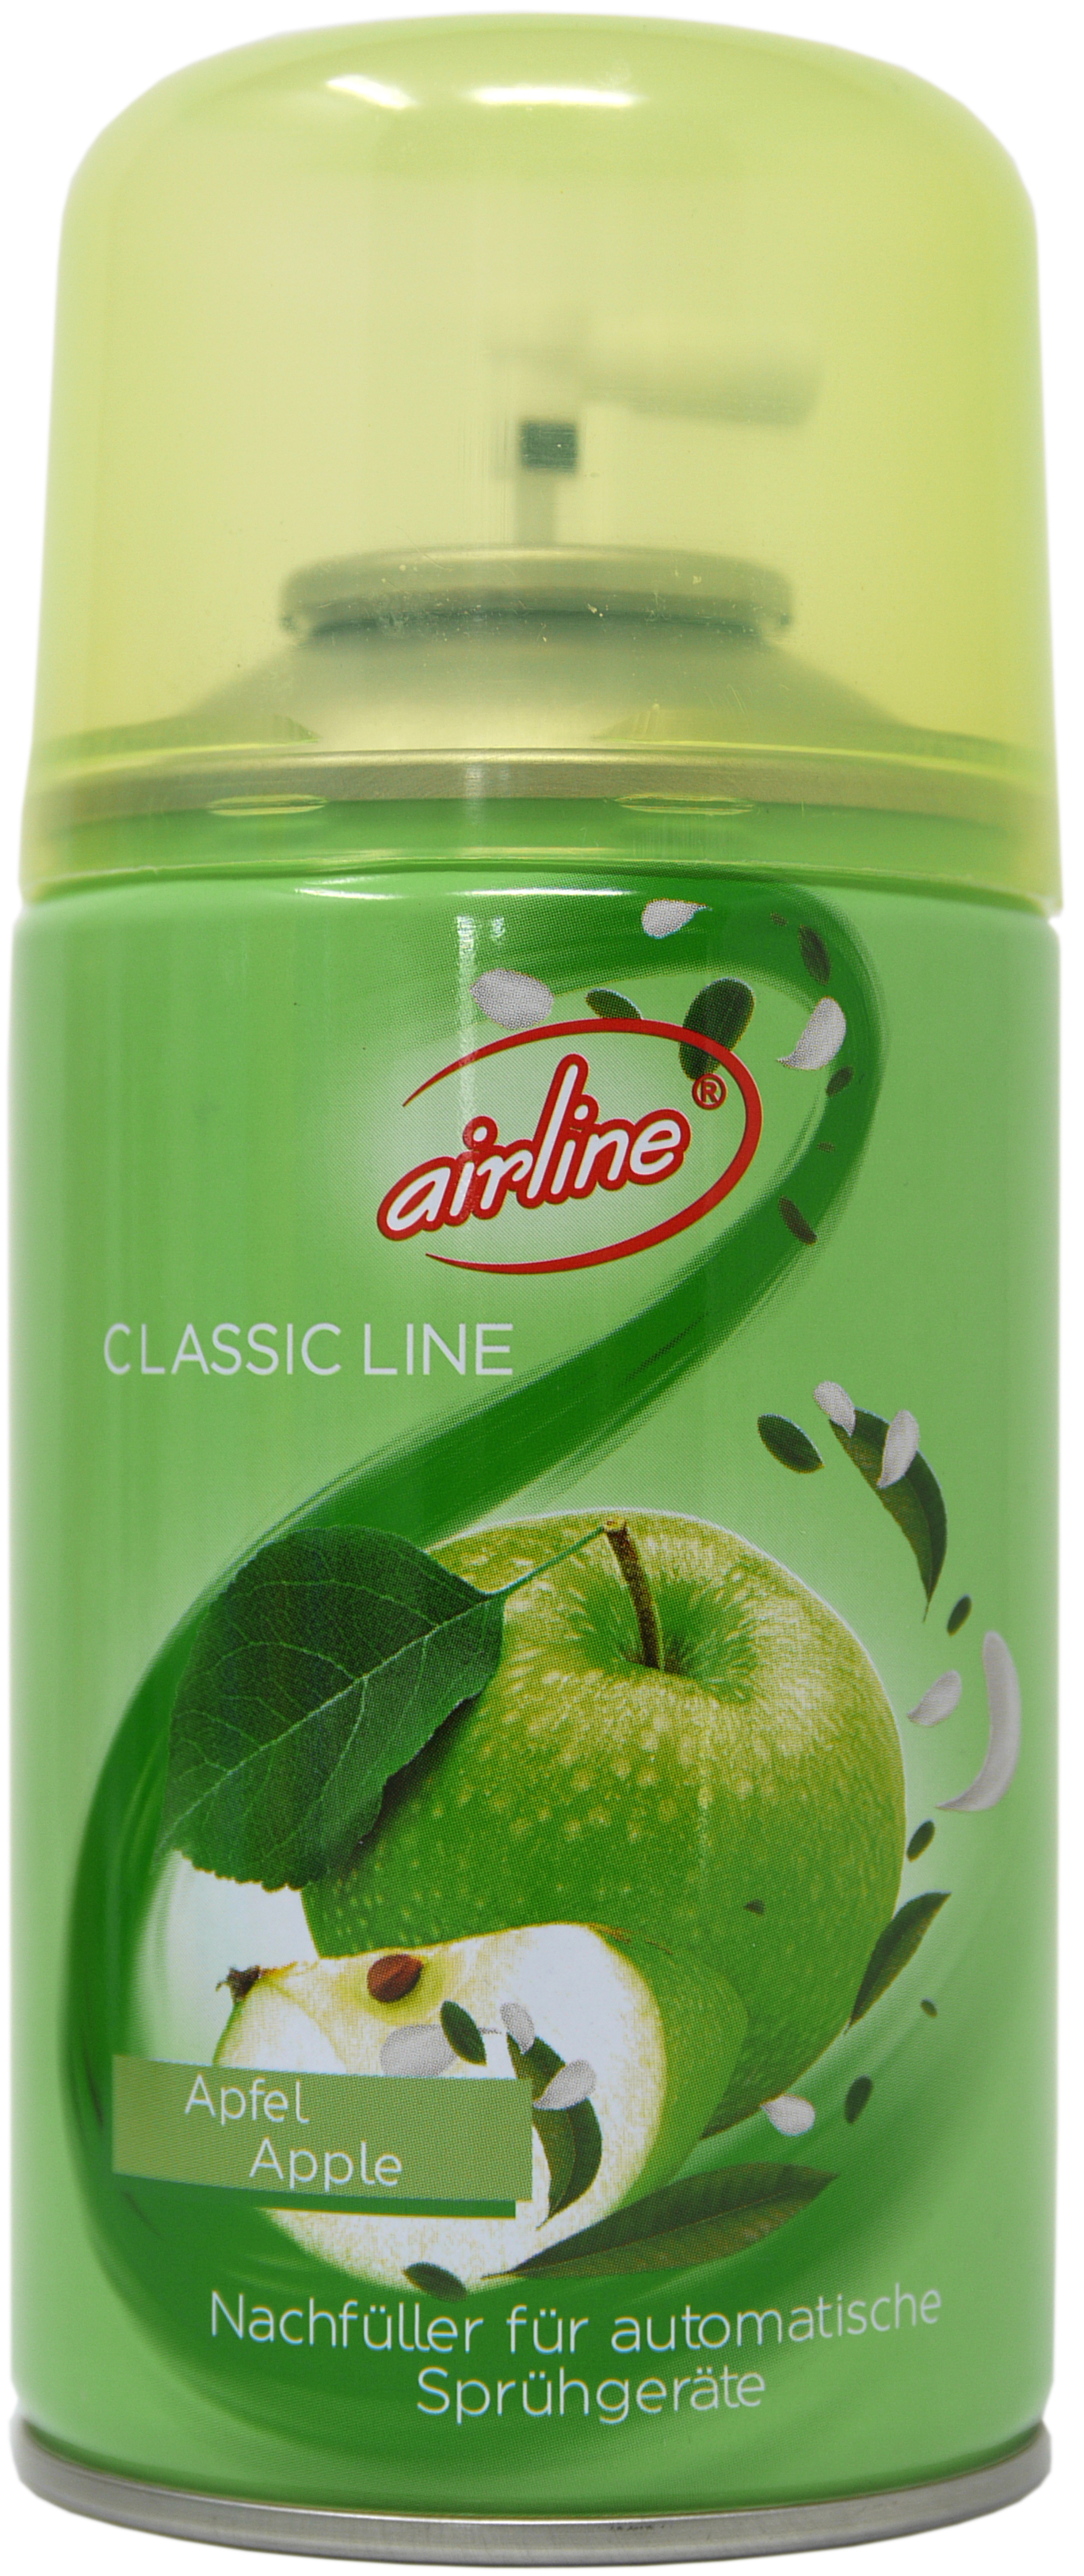 00507 - Classic Line apple refill 250 ml